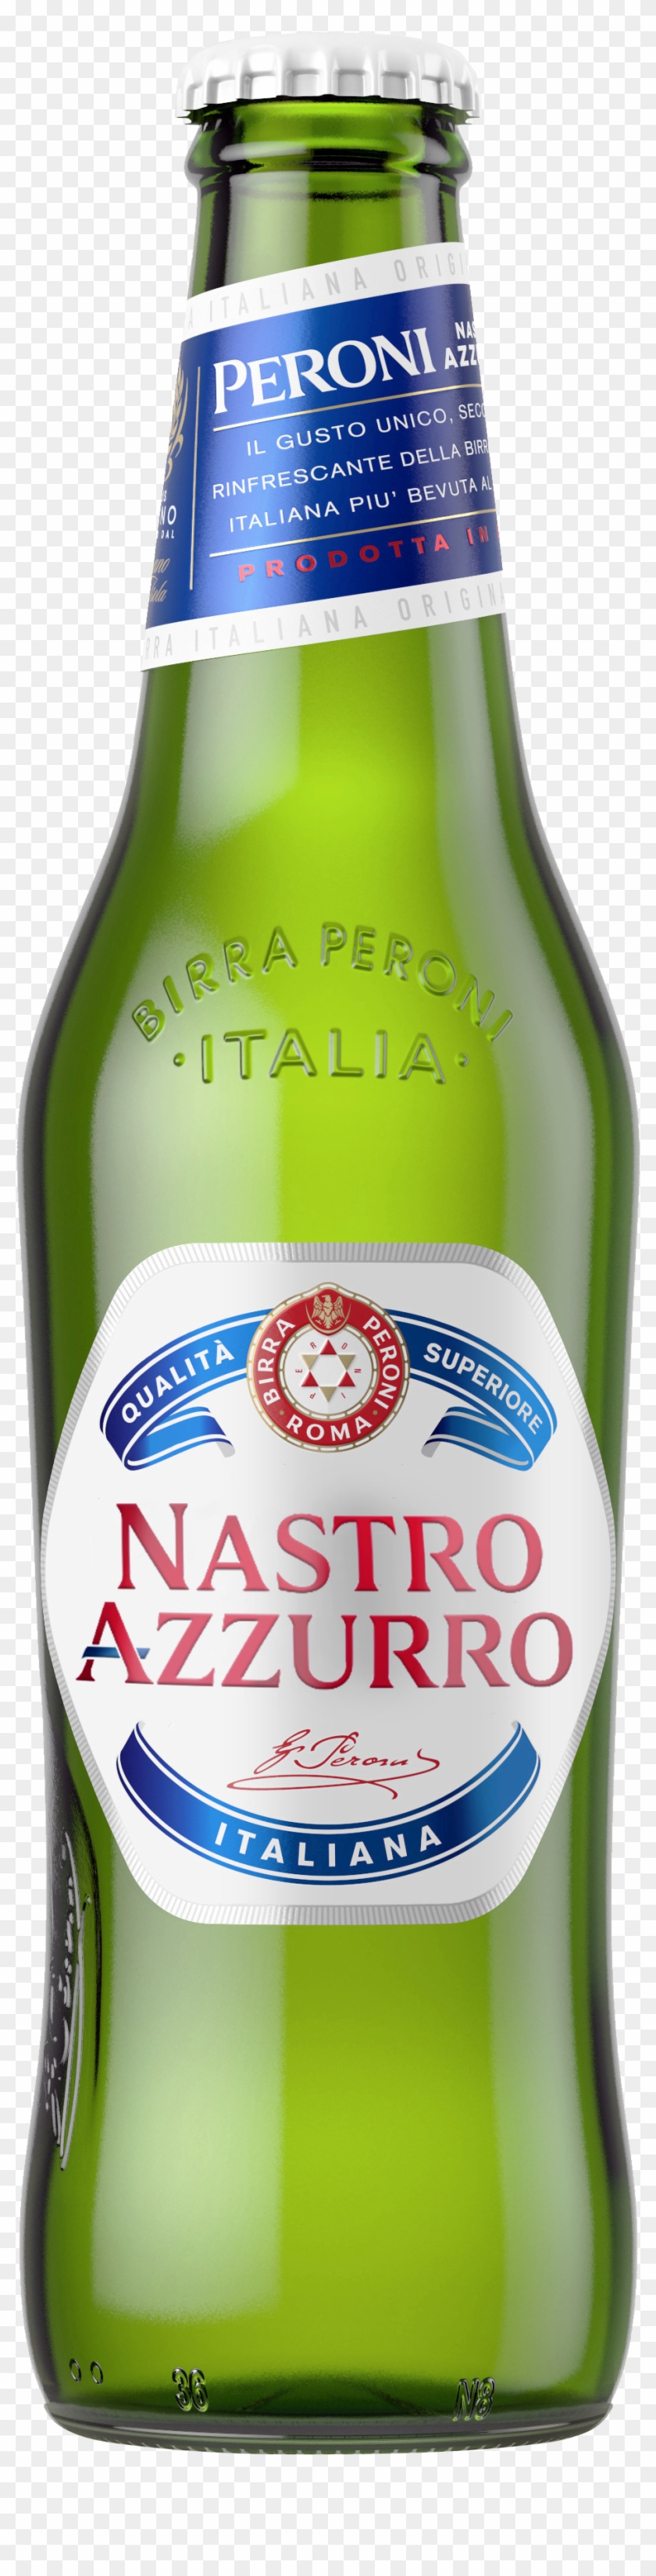 Peroni Nastro Azzurro Bottle - Beer Bottle Clipart #5369267